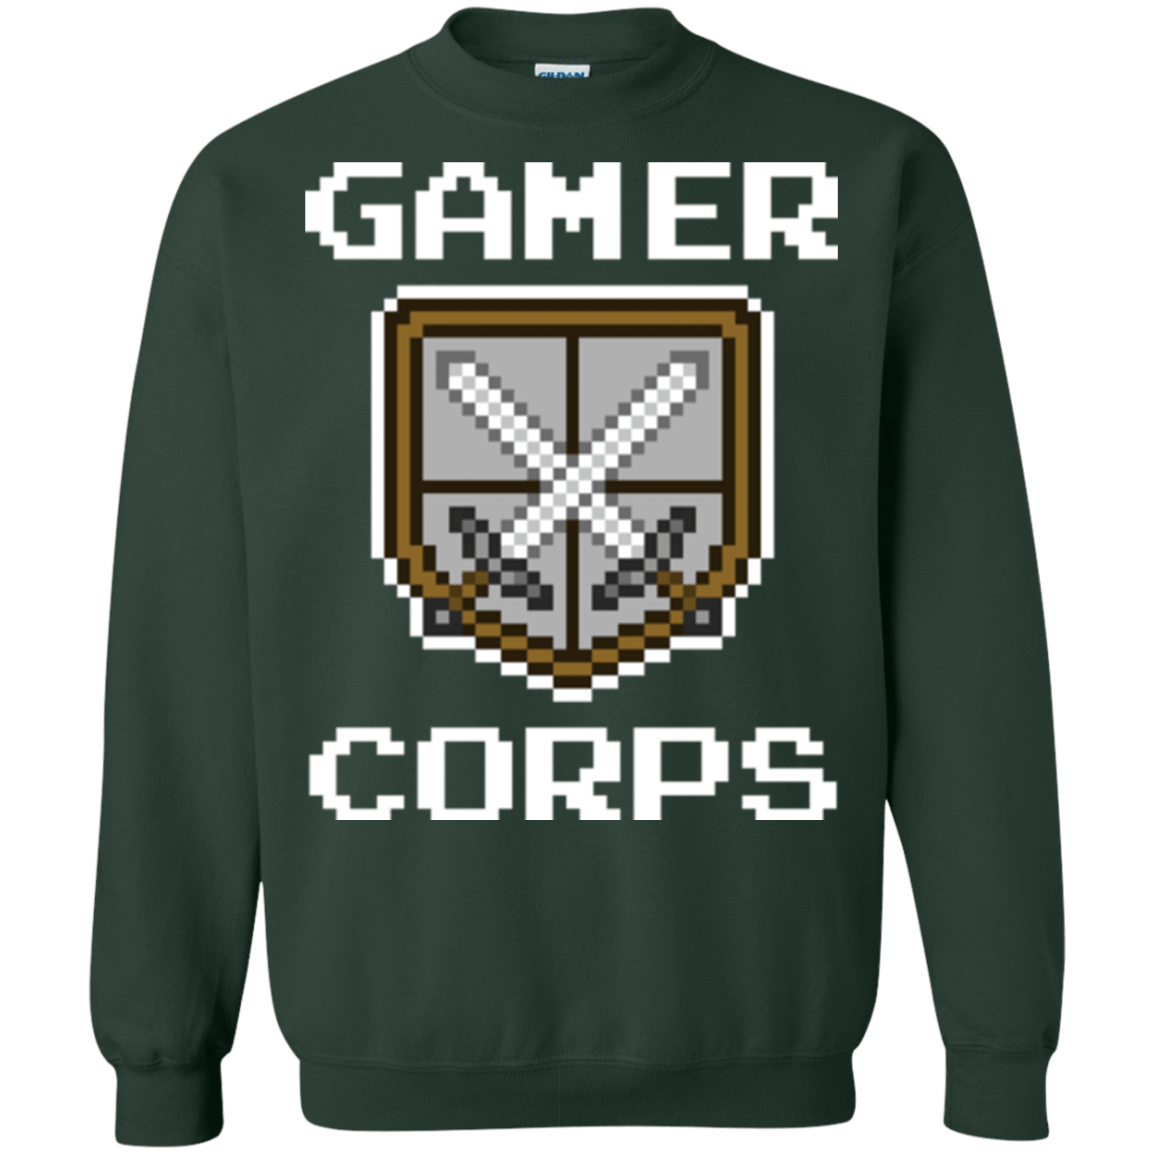 Sweatshirts Forest Green / Small Gamer corps Crewneck Sweatshirt